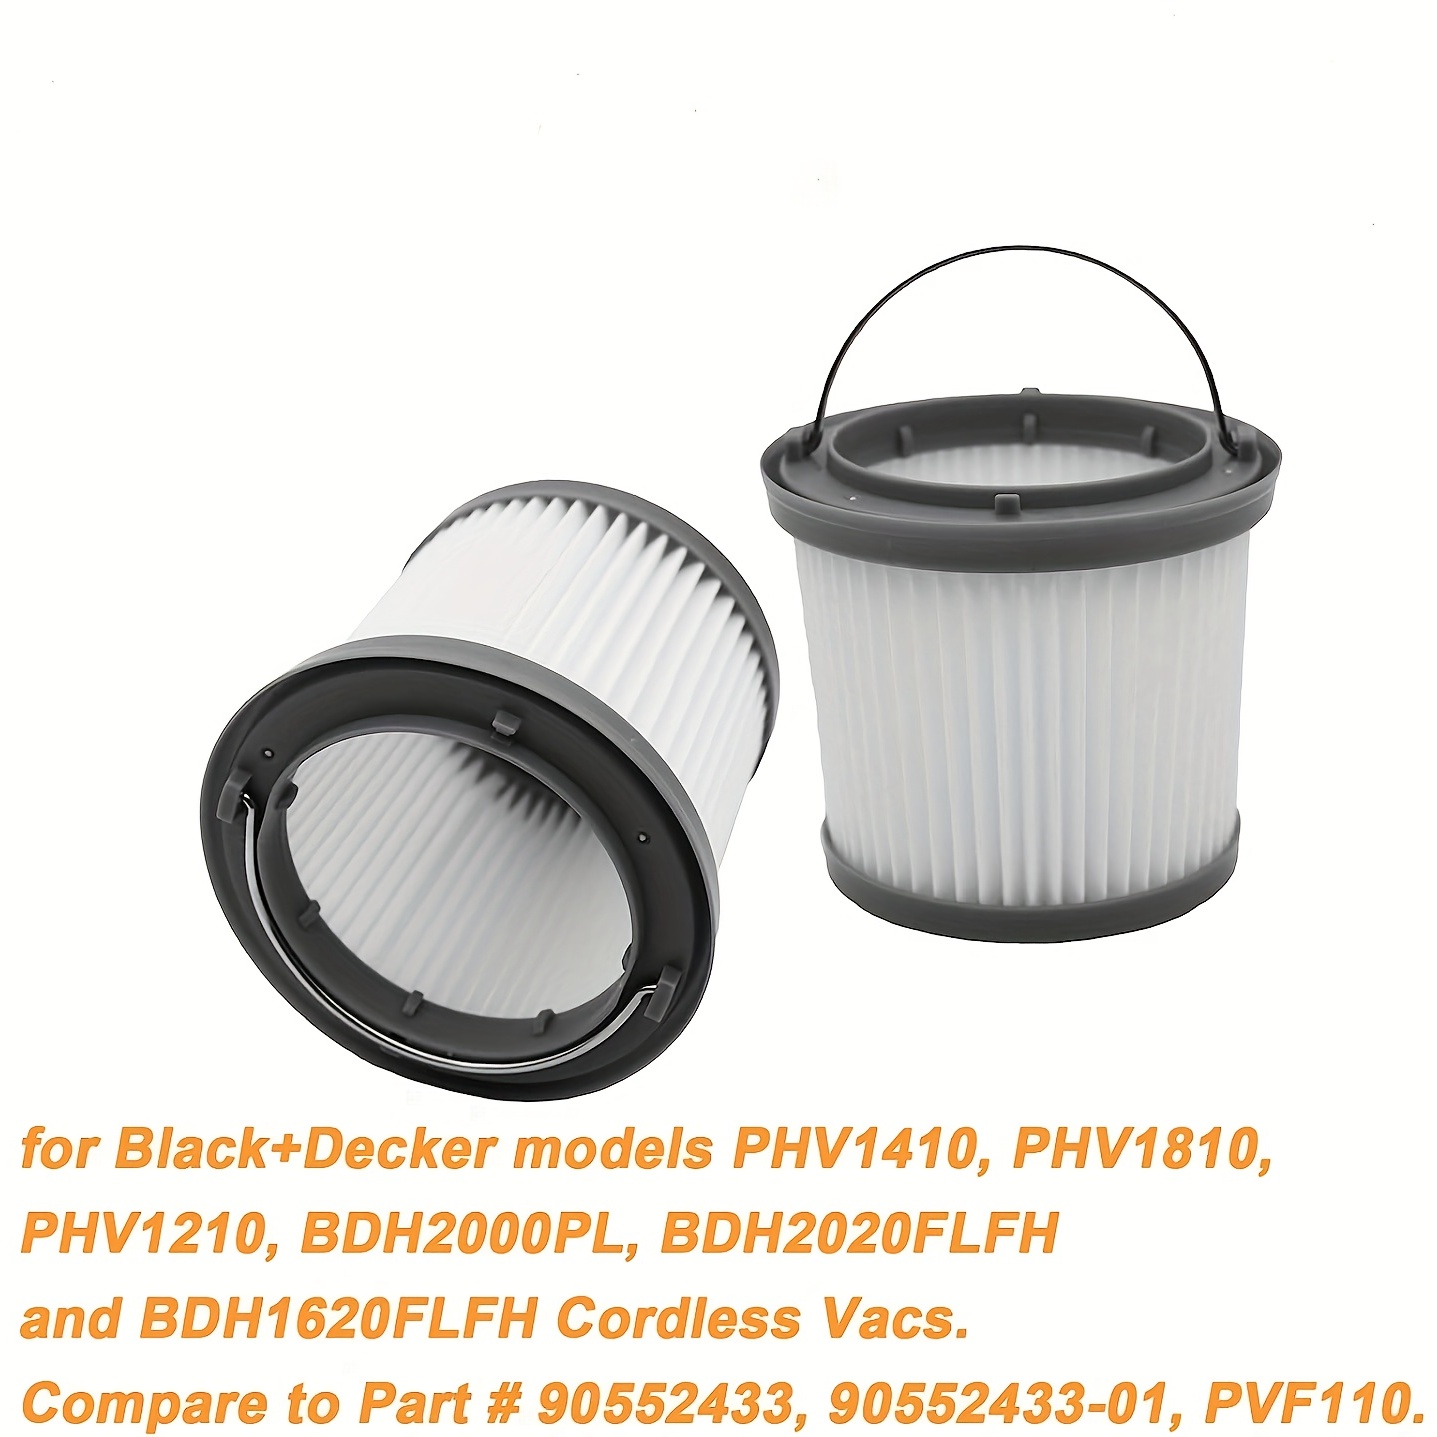 Black and Decker Pivot Vac PHV1810 Handheld Vacuum Review